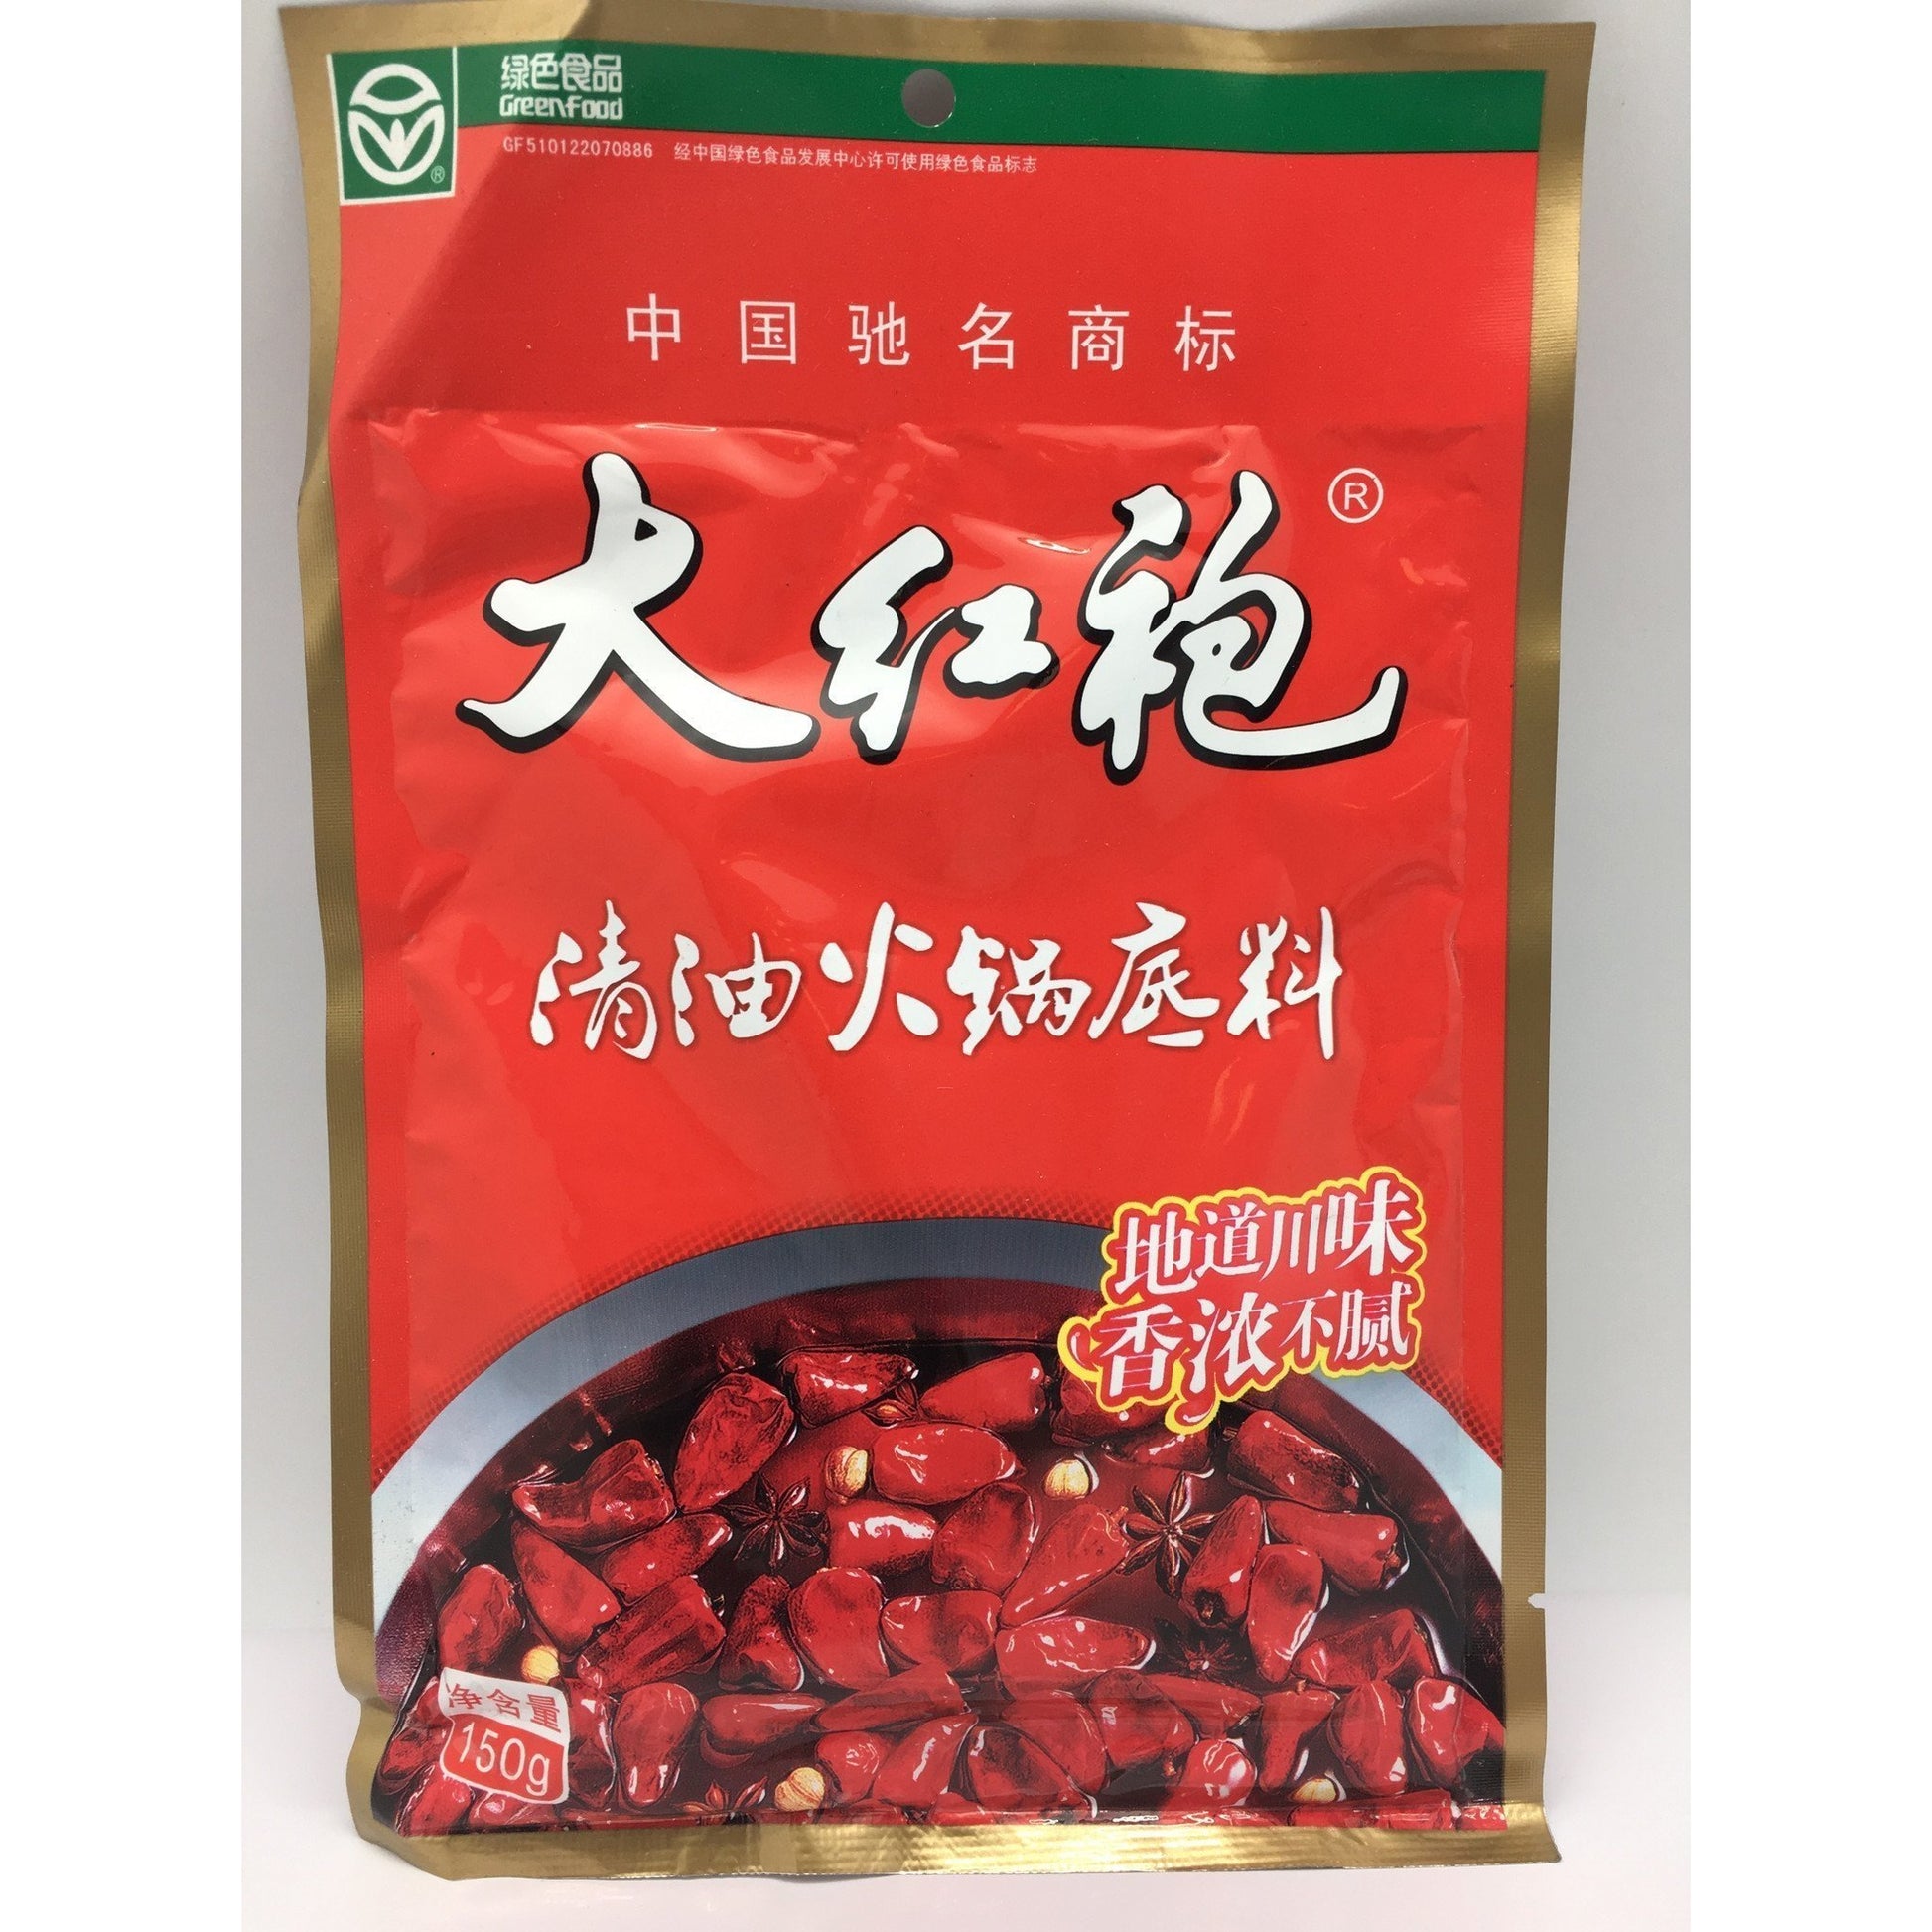 Q018C Da Hong Pao - Hot Pot Soup Base 150g - 50 bags / 1 CTN - New Eastland Pty Ltd - Asian food wholesalers